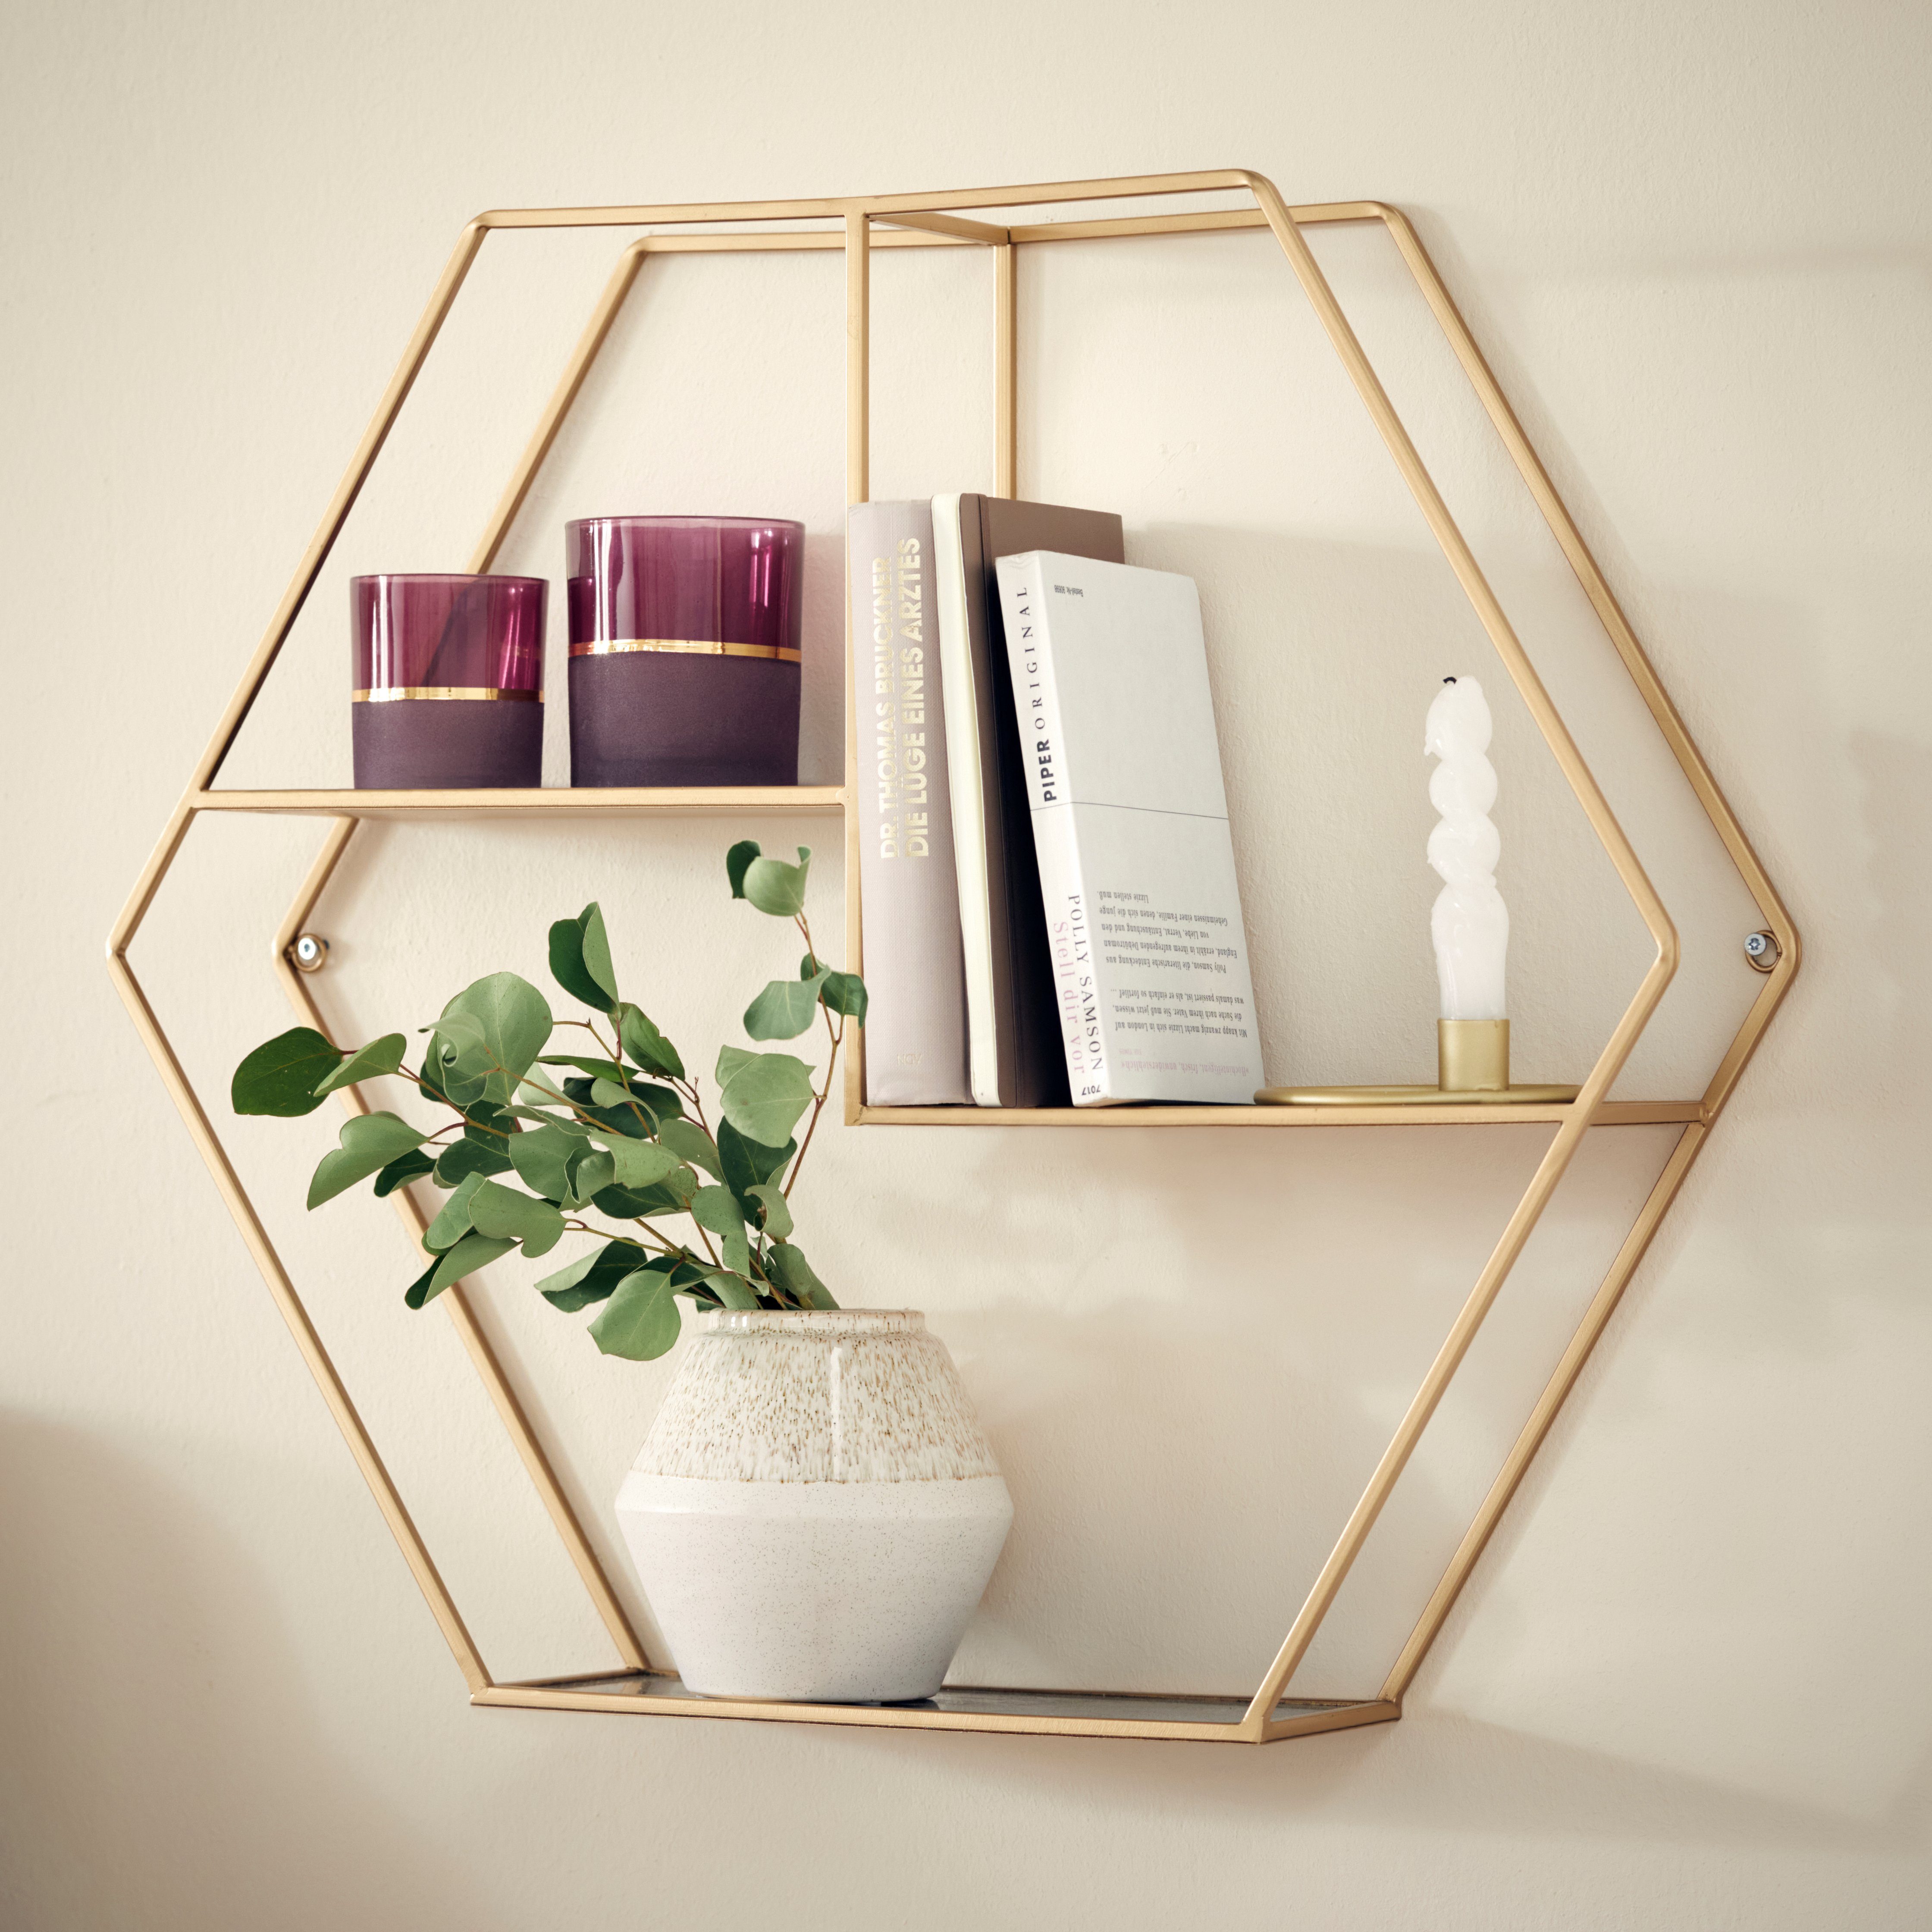 Leonique Deko-Wandregal Hexagon, sechseckiges Element, goldfarben, Design in modernem